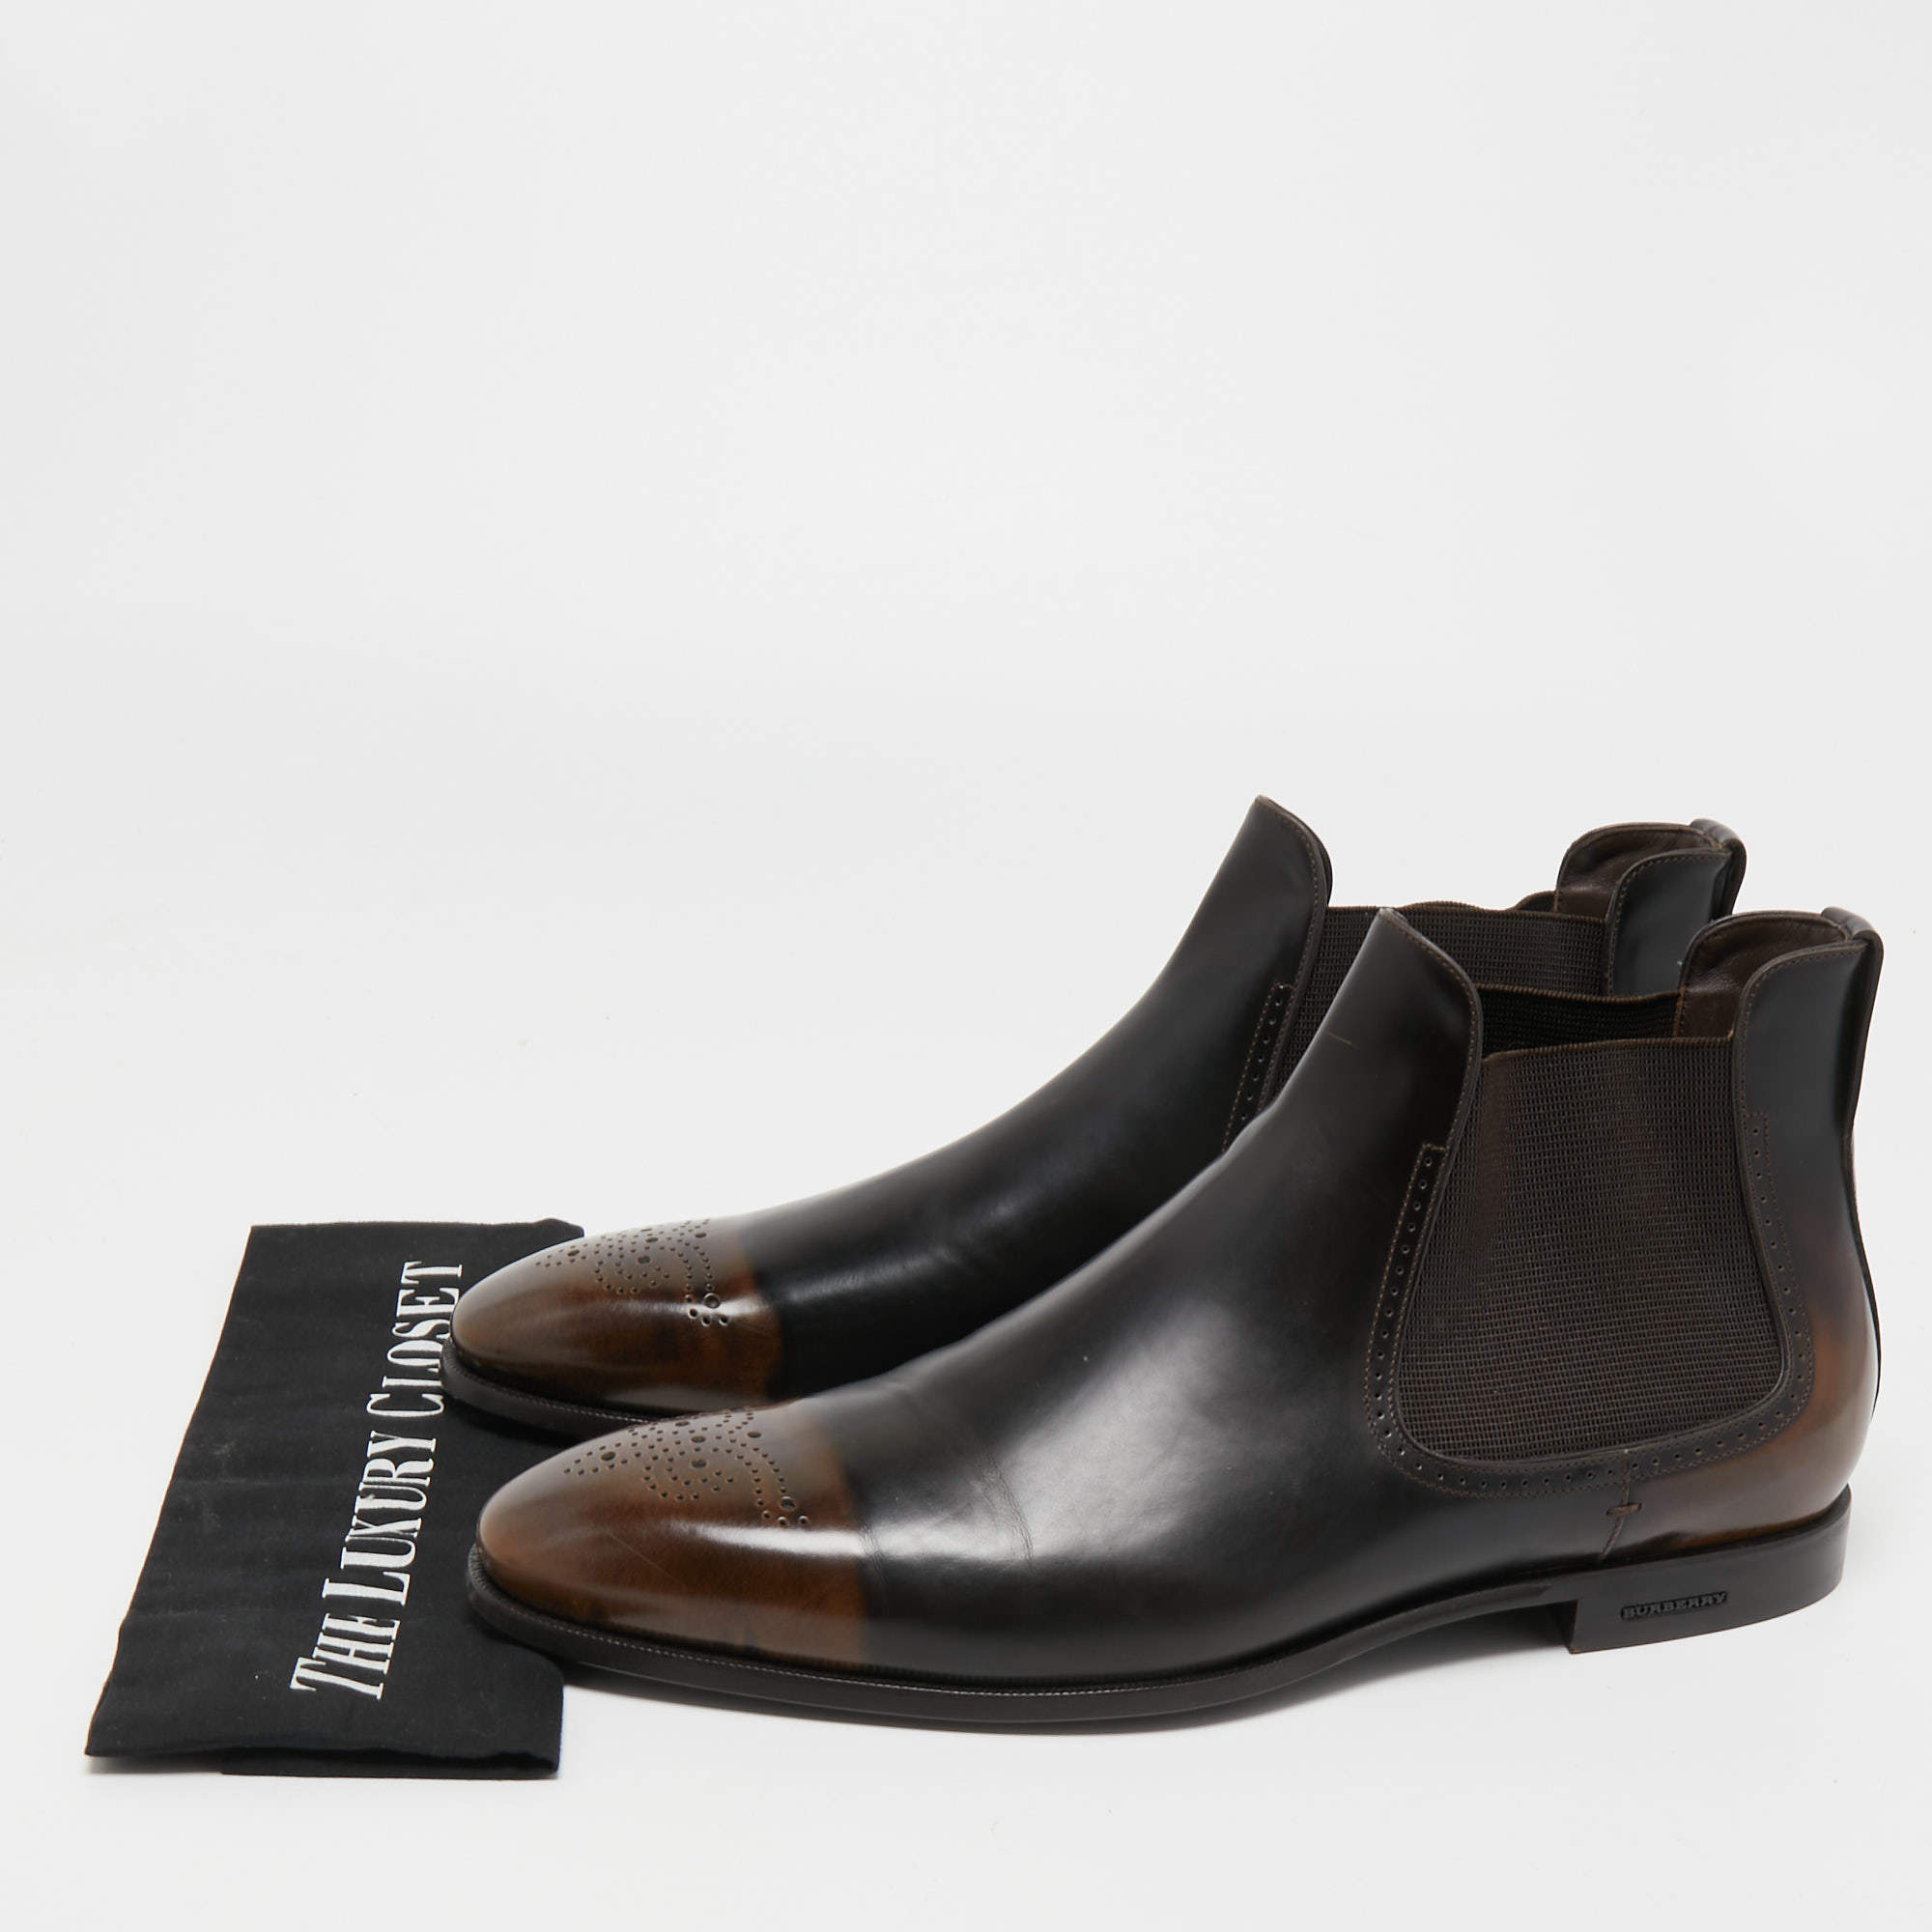 sociaal Kiezen Materialisme Burberry Two Tone Leather Chelsea Boots Size 46 Burberry | TLC